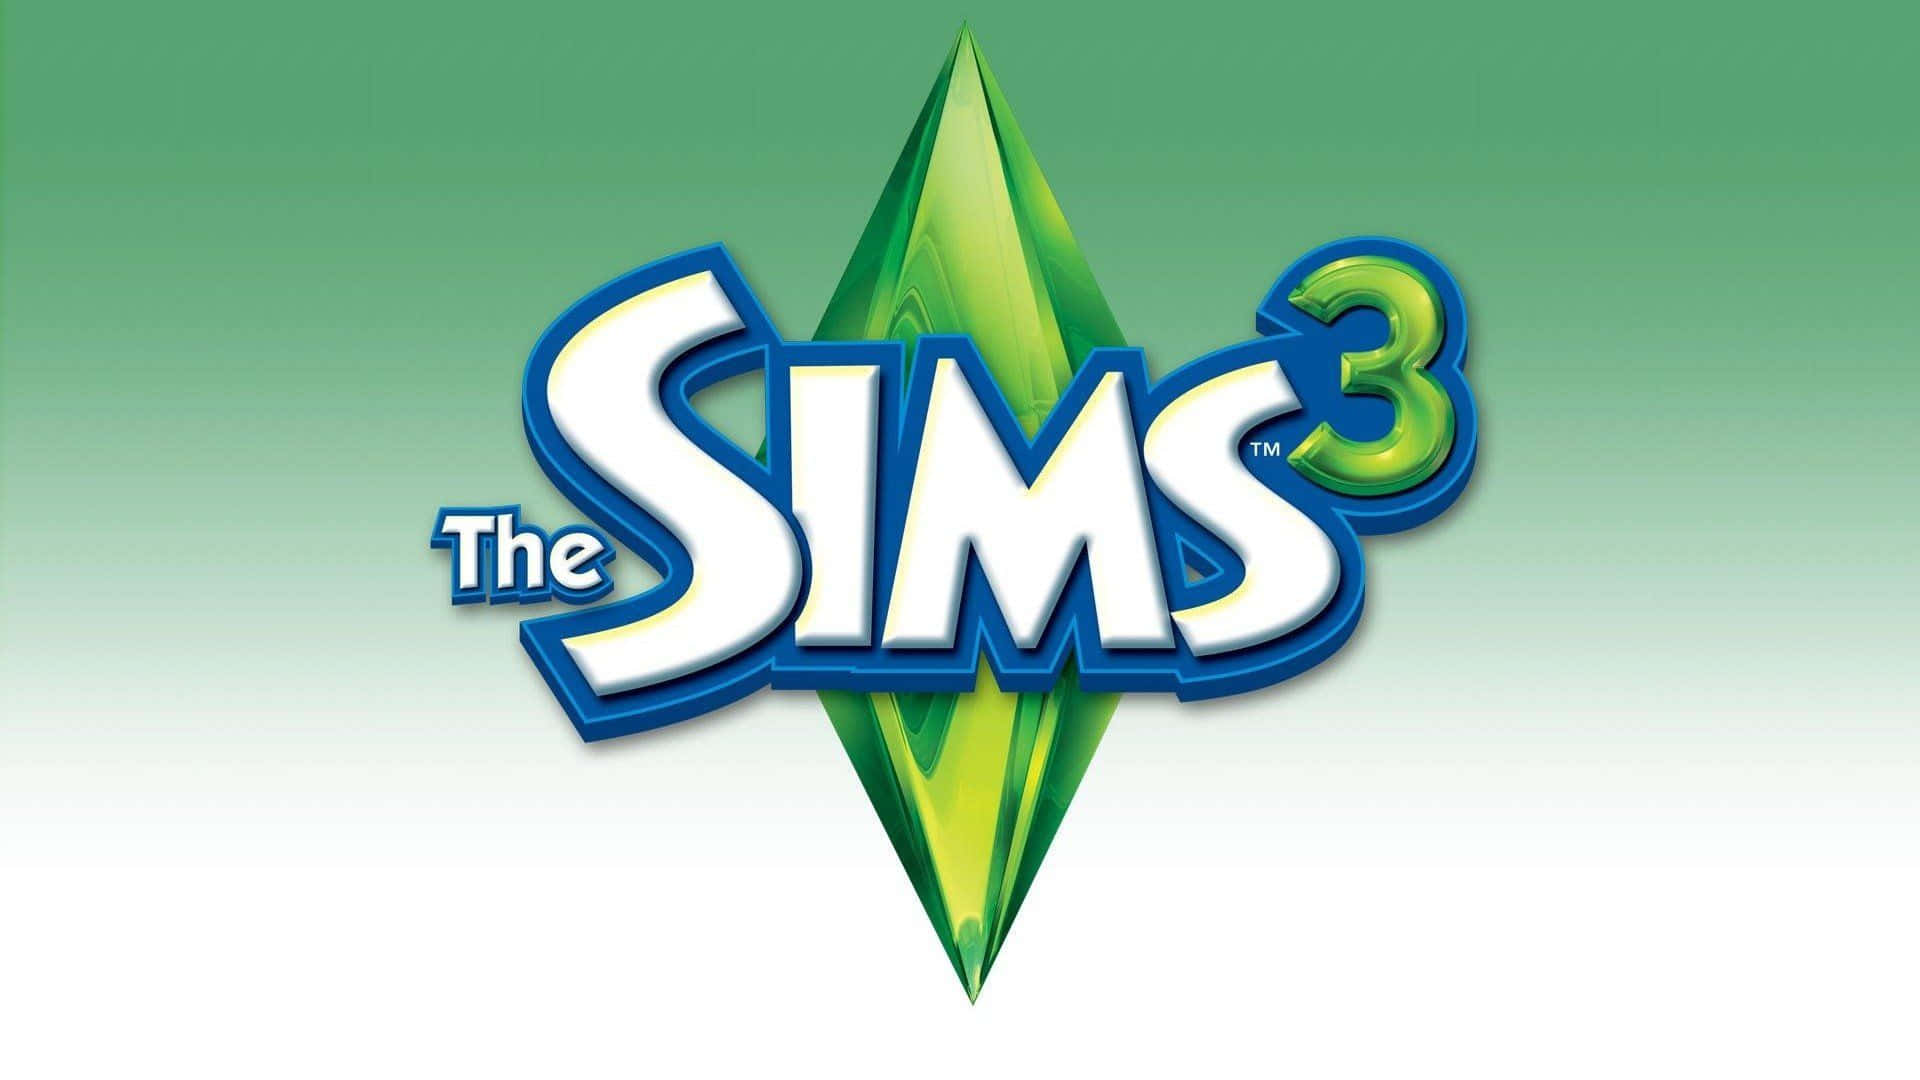 Lekaomkring Och Ha Kul I The Sims 3. Wallpaper